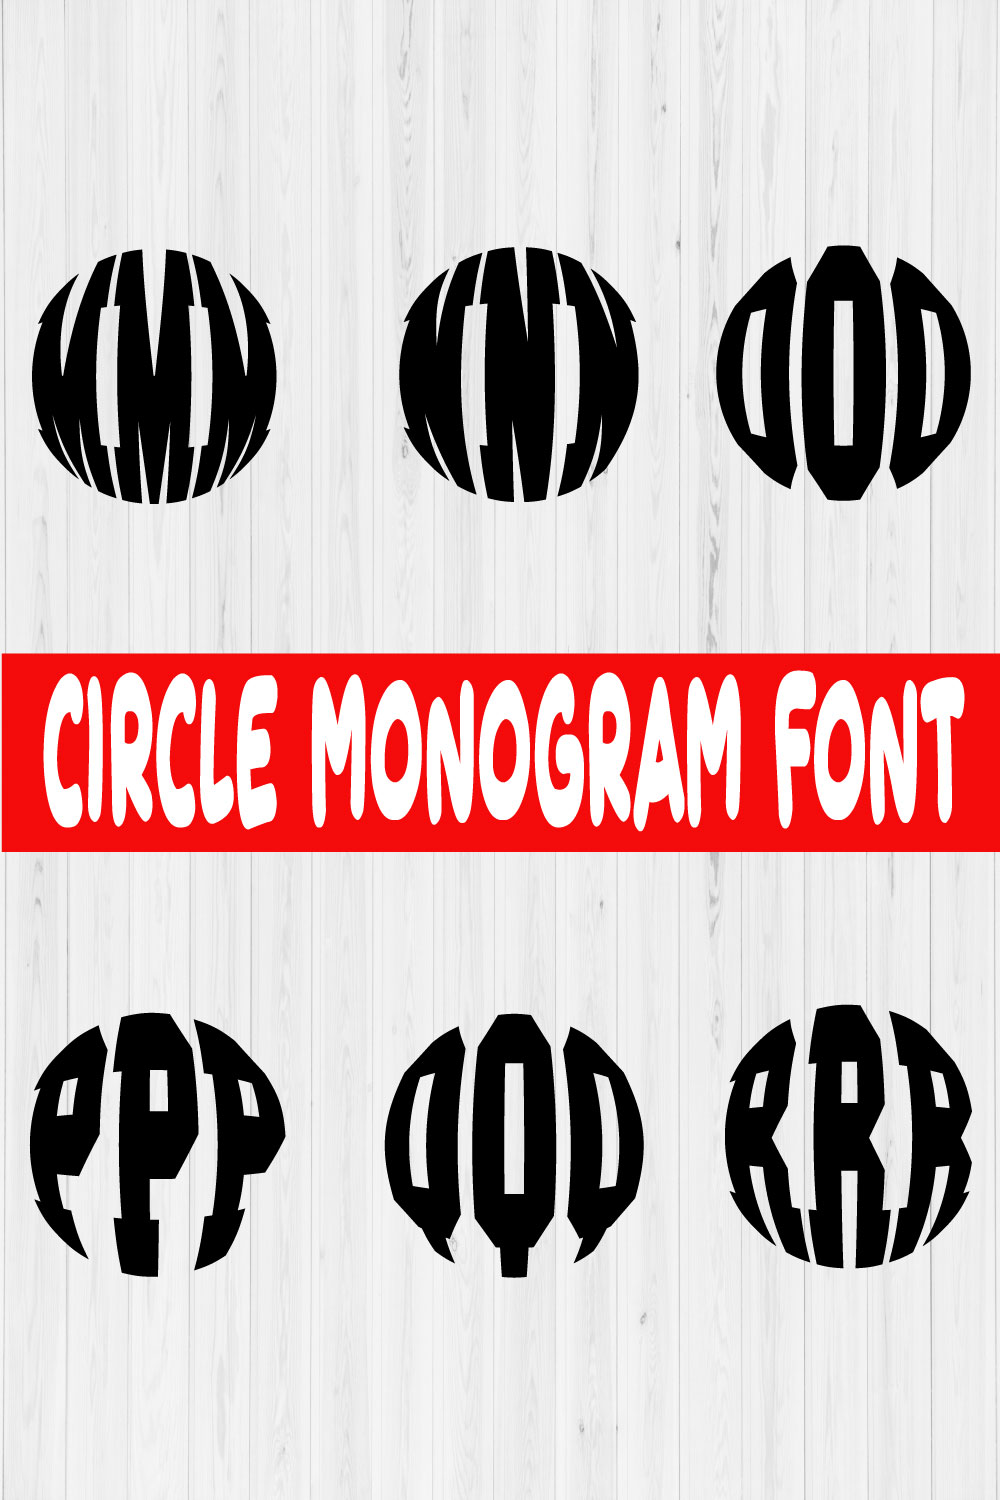 Circle Monogram Font Vol3 pinterest preview image.